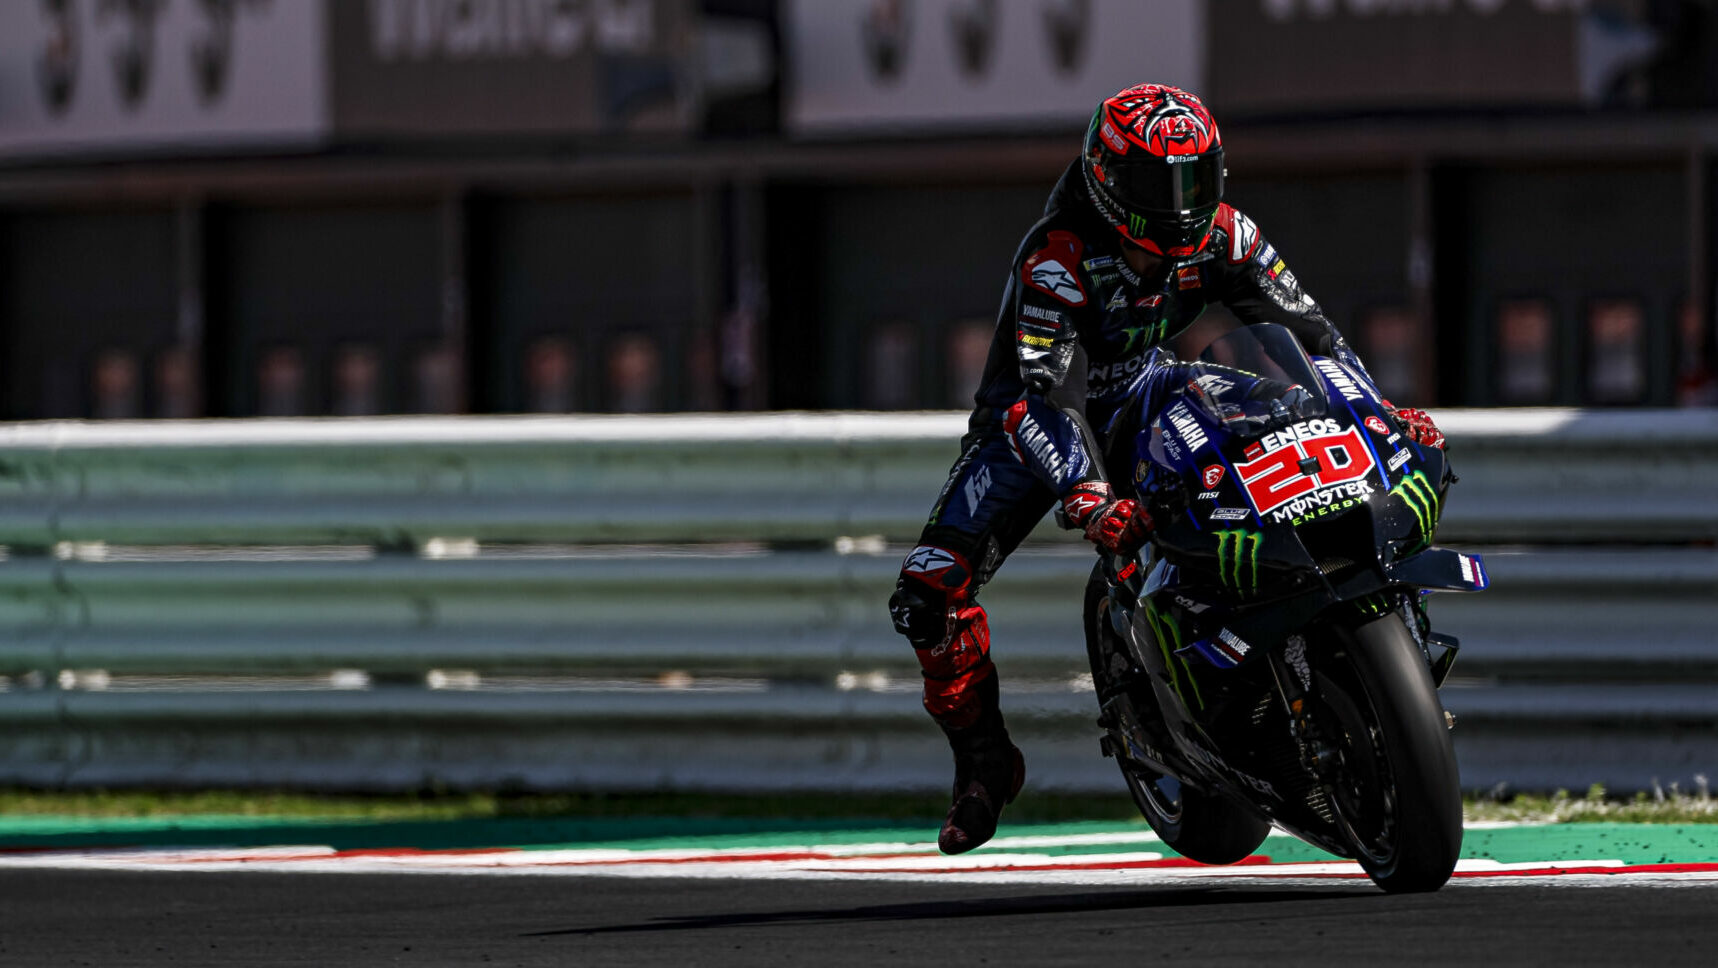 Fabio Quartararo (20) topped the two-day post-race MotoGP test at Misano. Photo courtesy Monster Energy Yamaha.